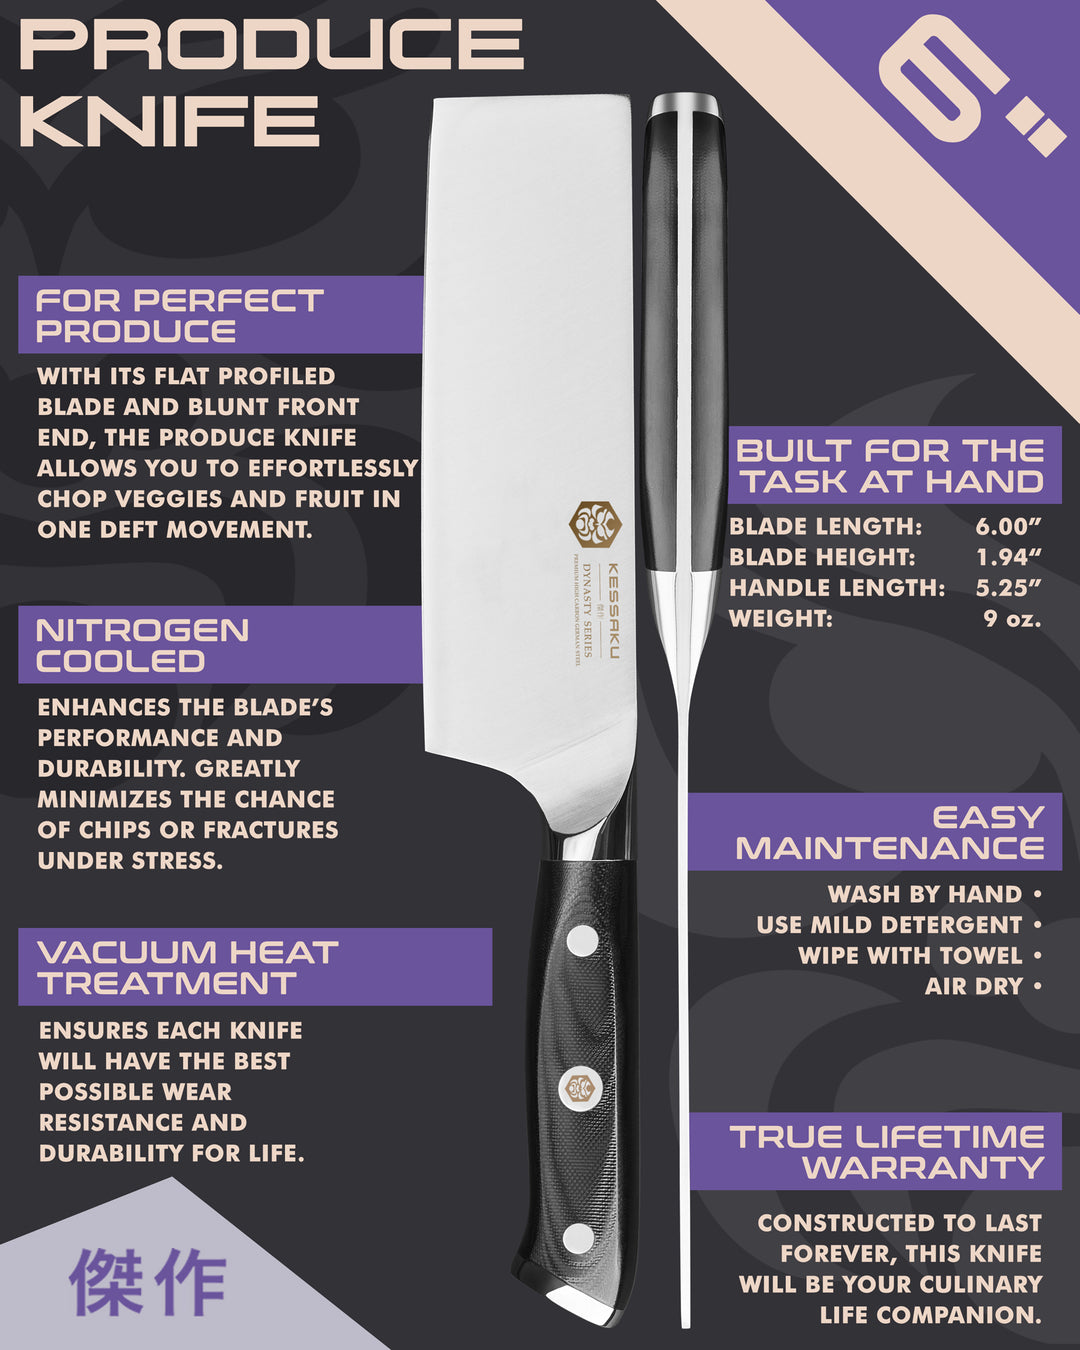 Kessaku Dynasty Series Produce Knife uses, dimensions, maintenance, warranty info, and additional blade treatments